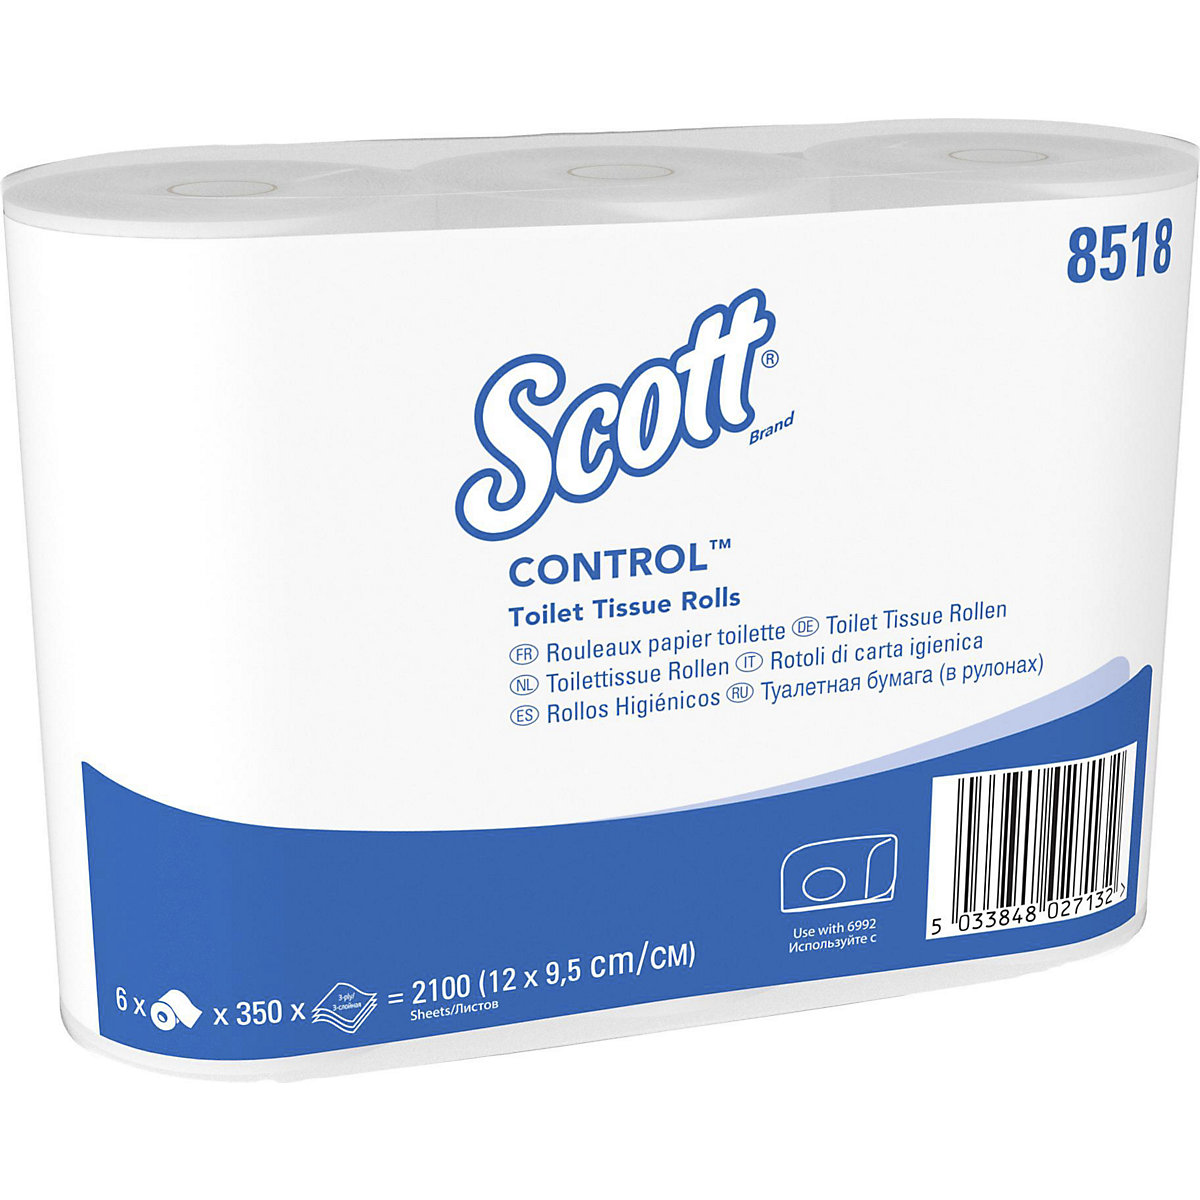 Štandardný toaletný papier Scott® CONTROL™ – Kimberly-Clark